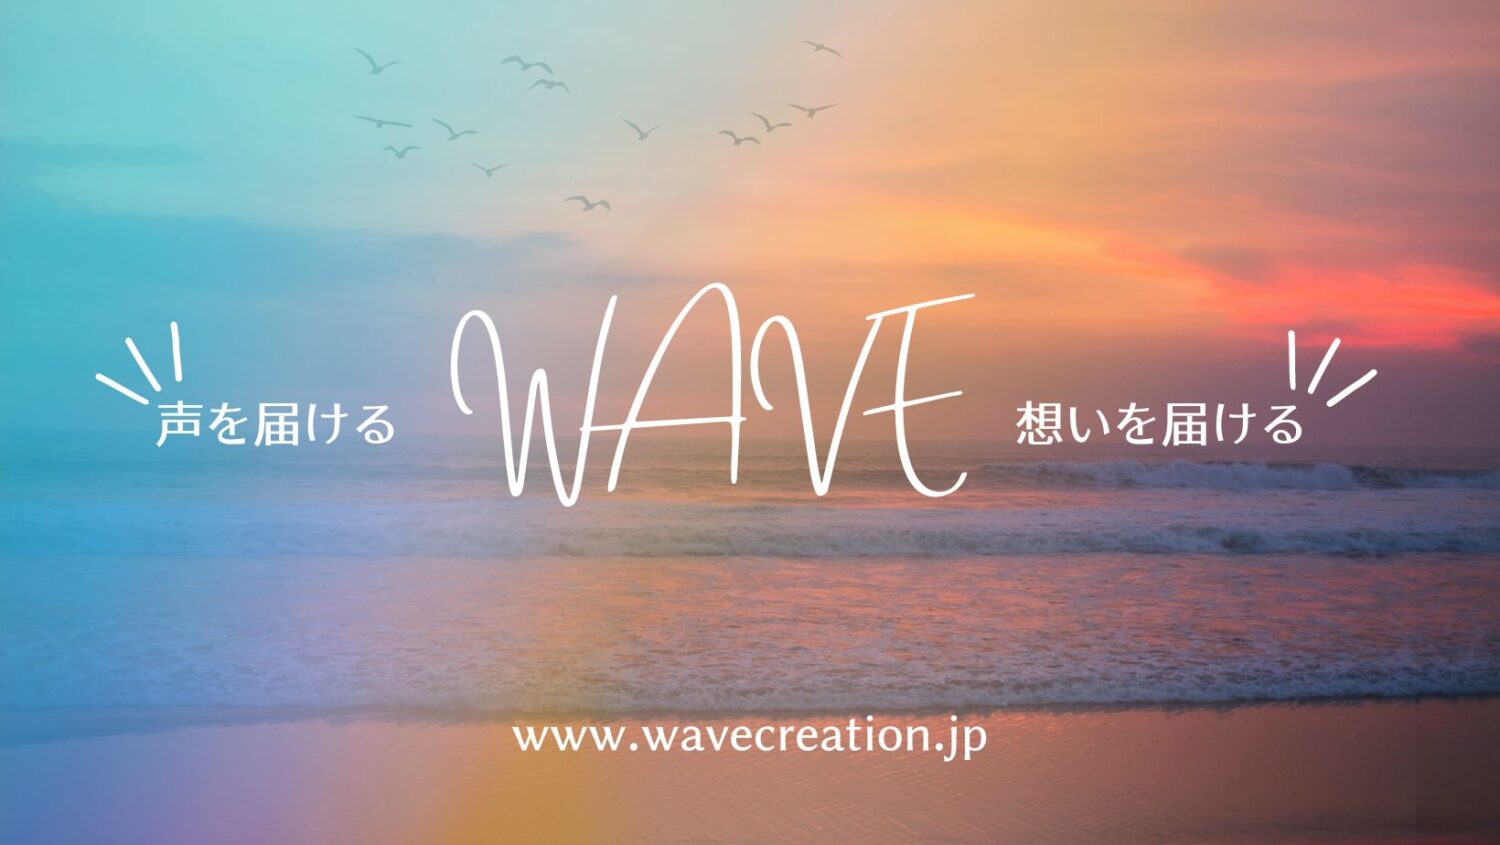 WAVE CREATION株式会社